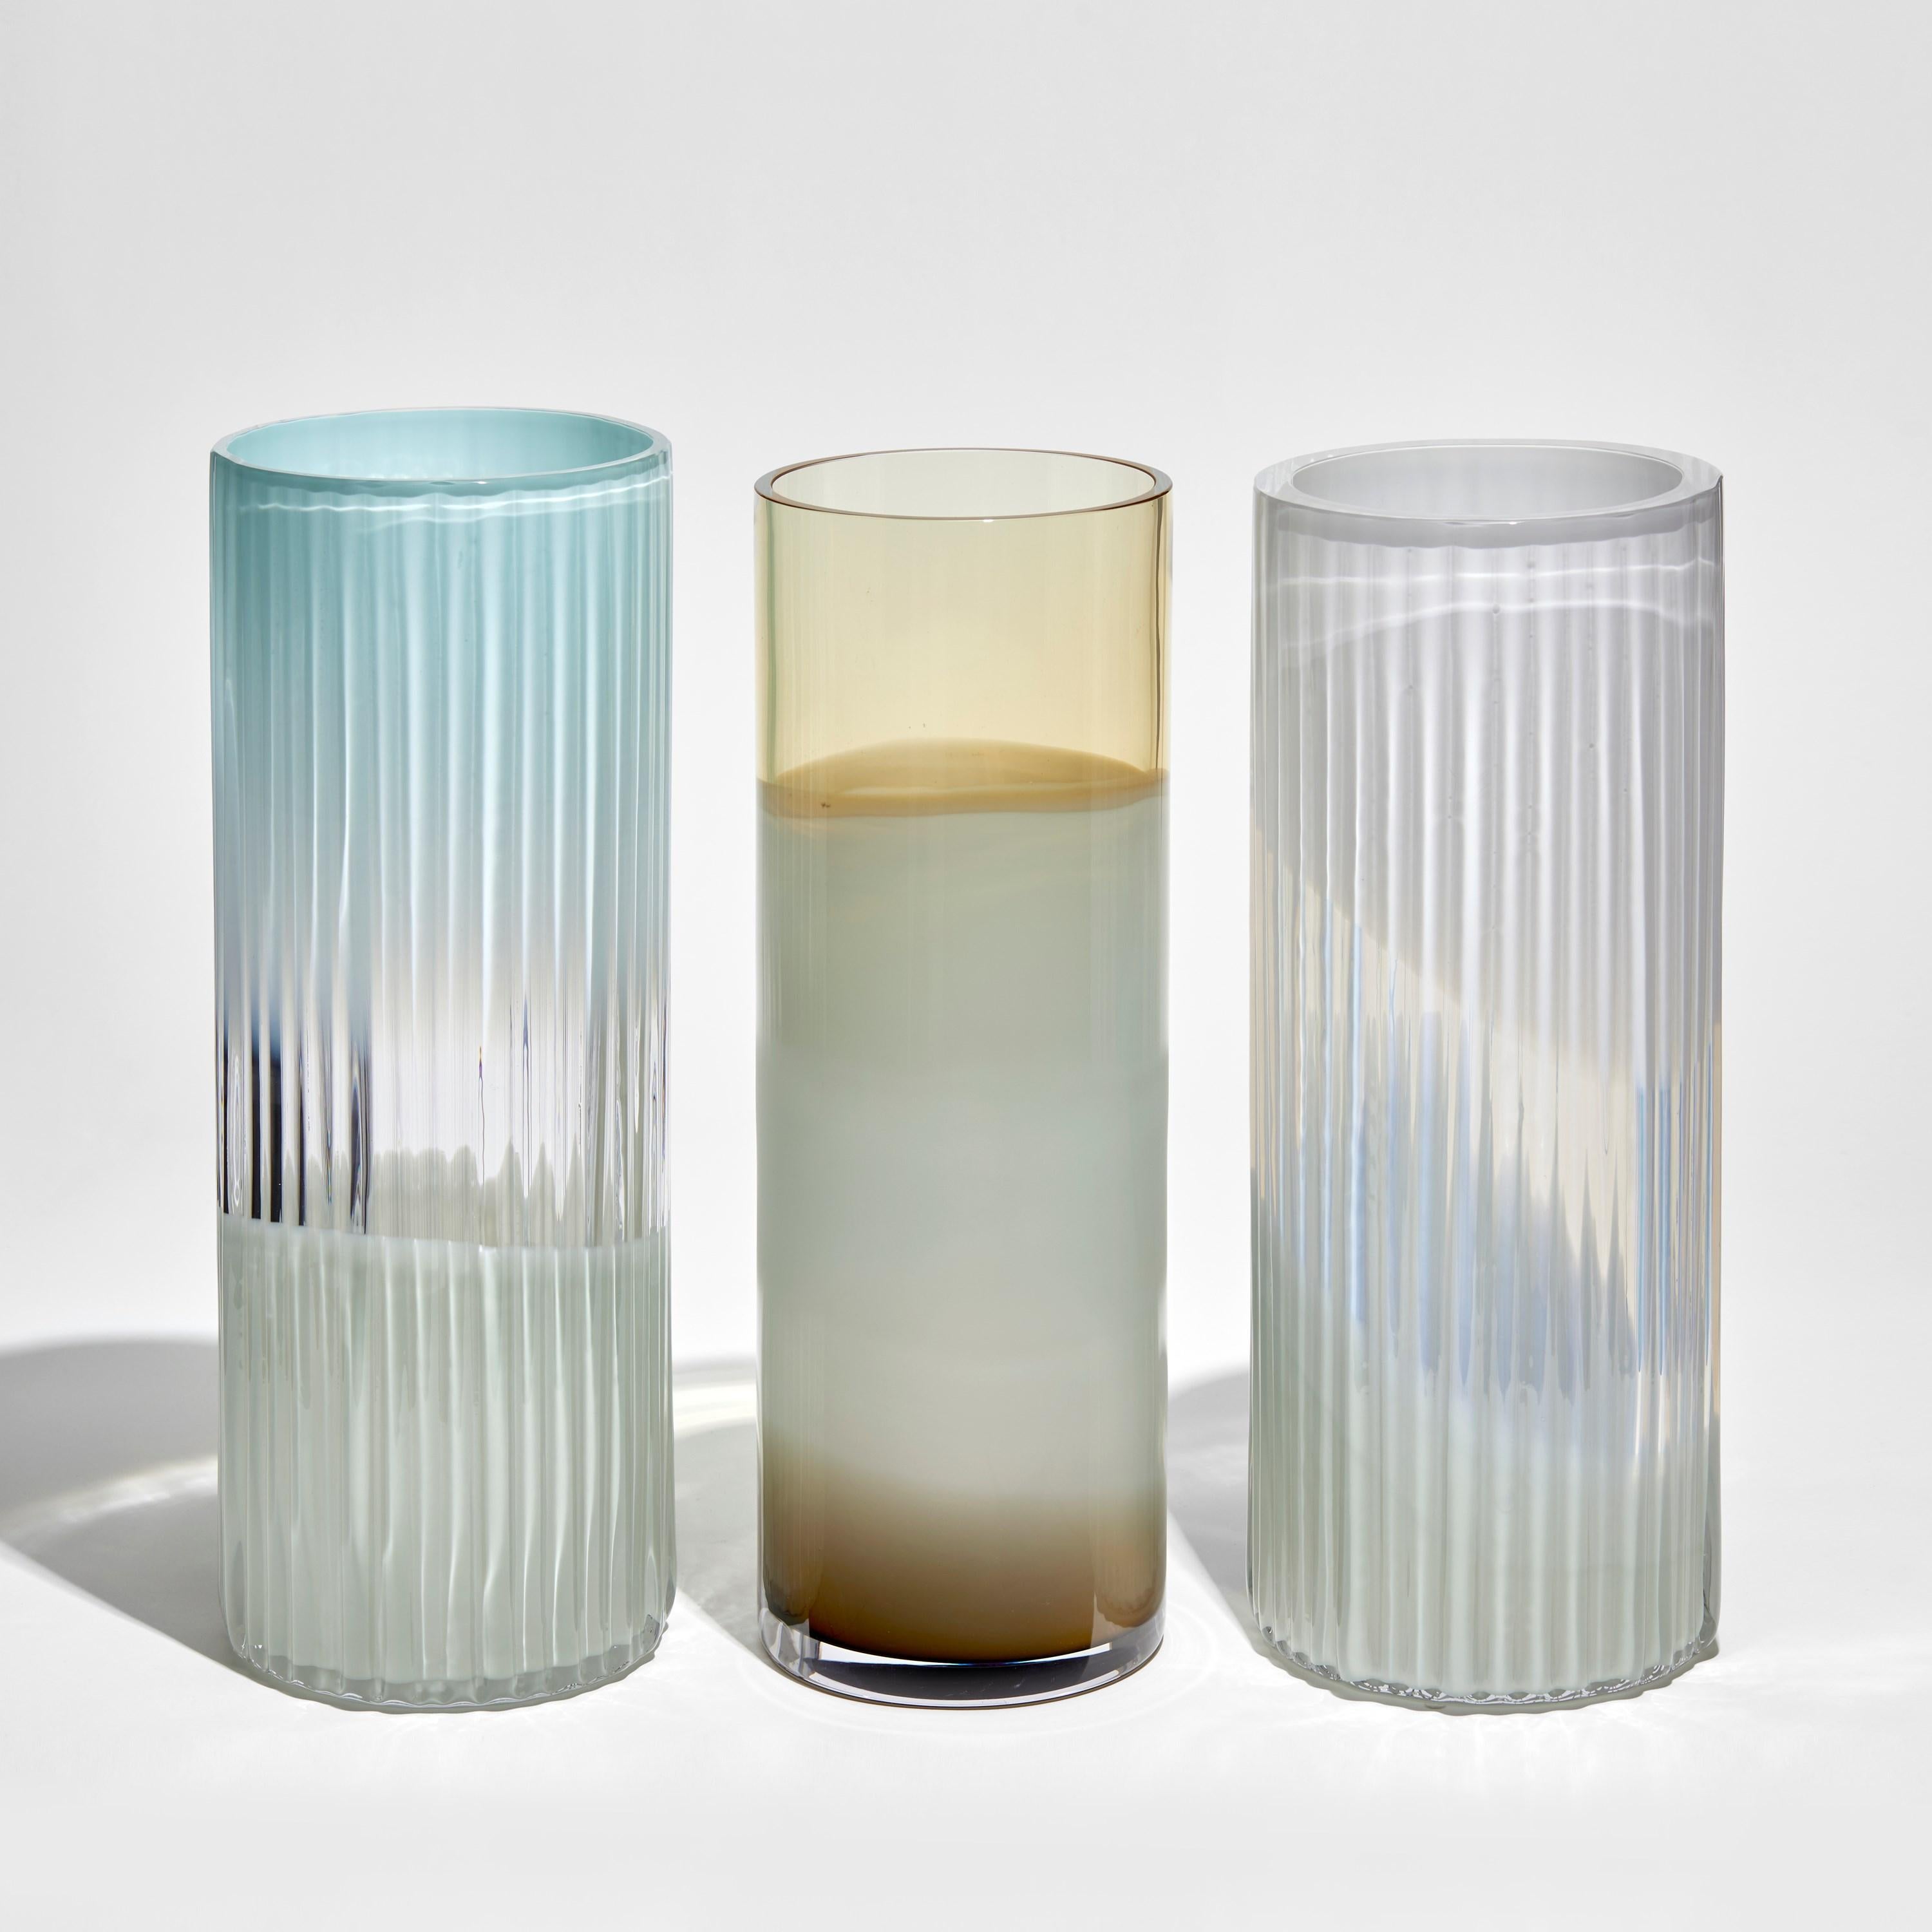 Organic Modern Plissé vase in Turquoise & Celadon, a glass vase by Lena Bergström For Sale